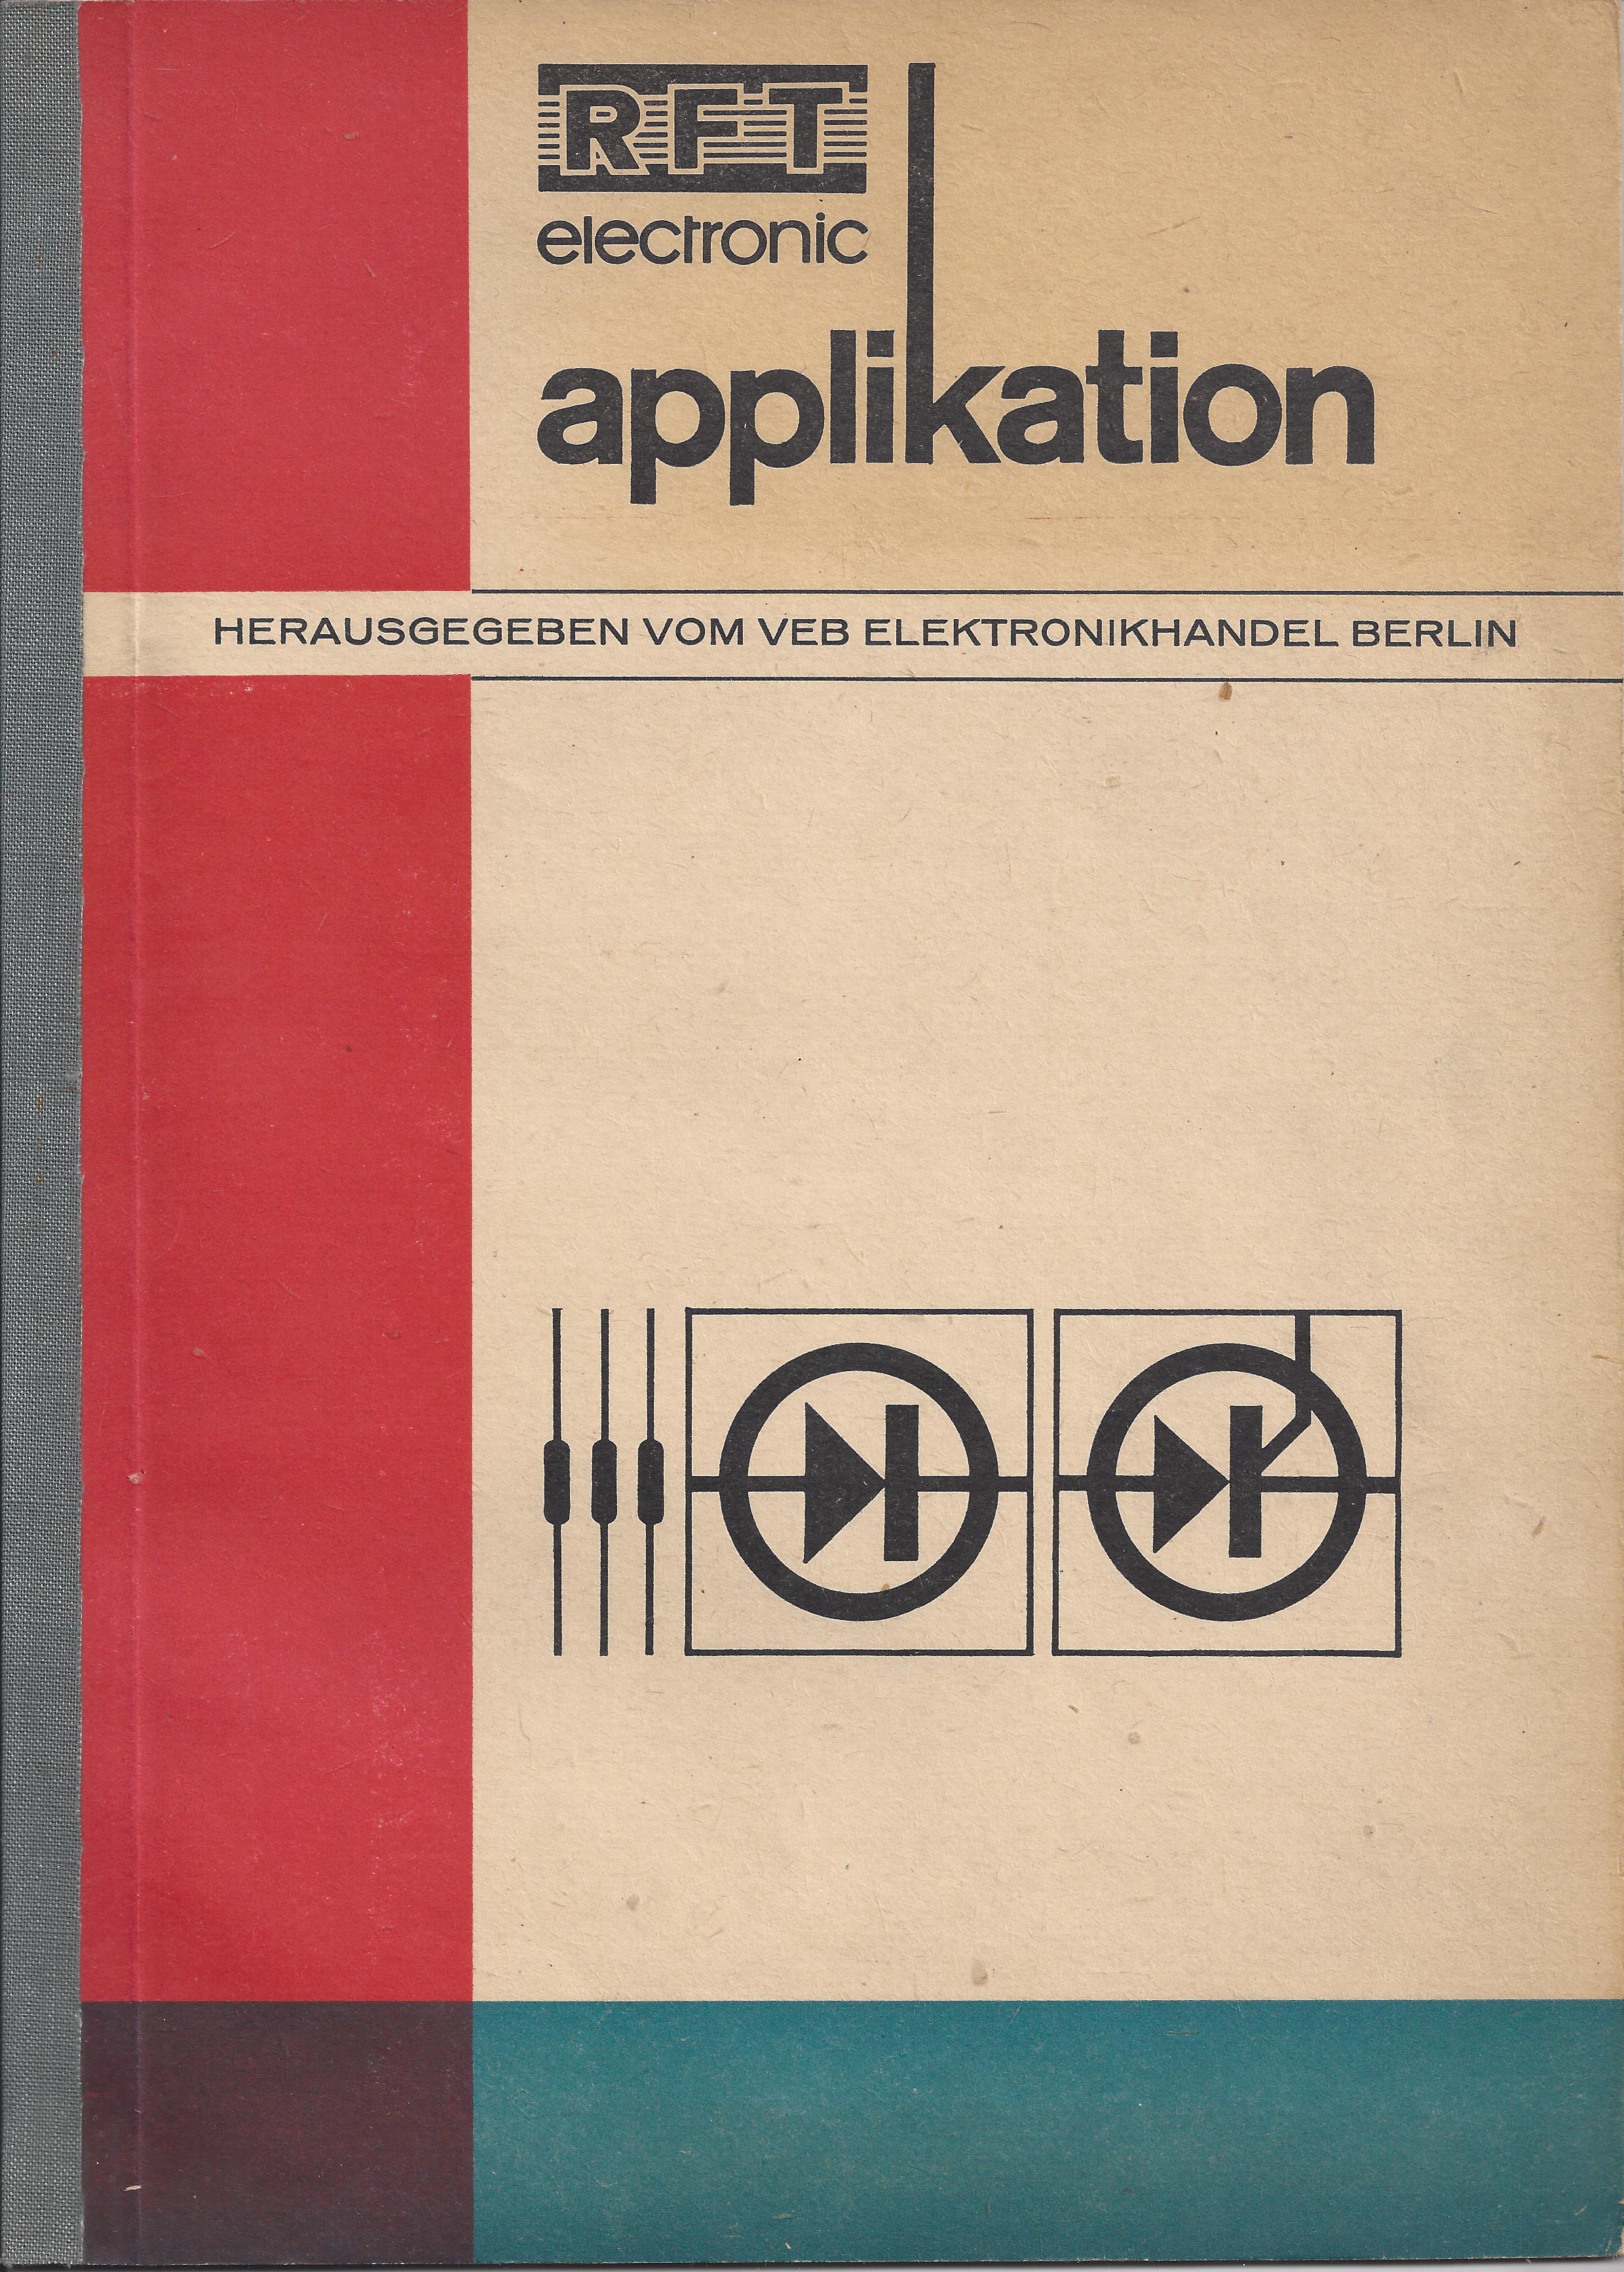 Applikationsheft RFT 1968 des Elektronikhandels (Industriesalon.de CC BY-SA)